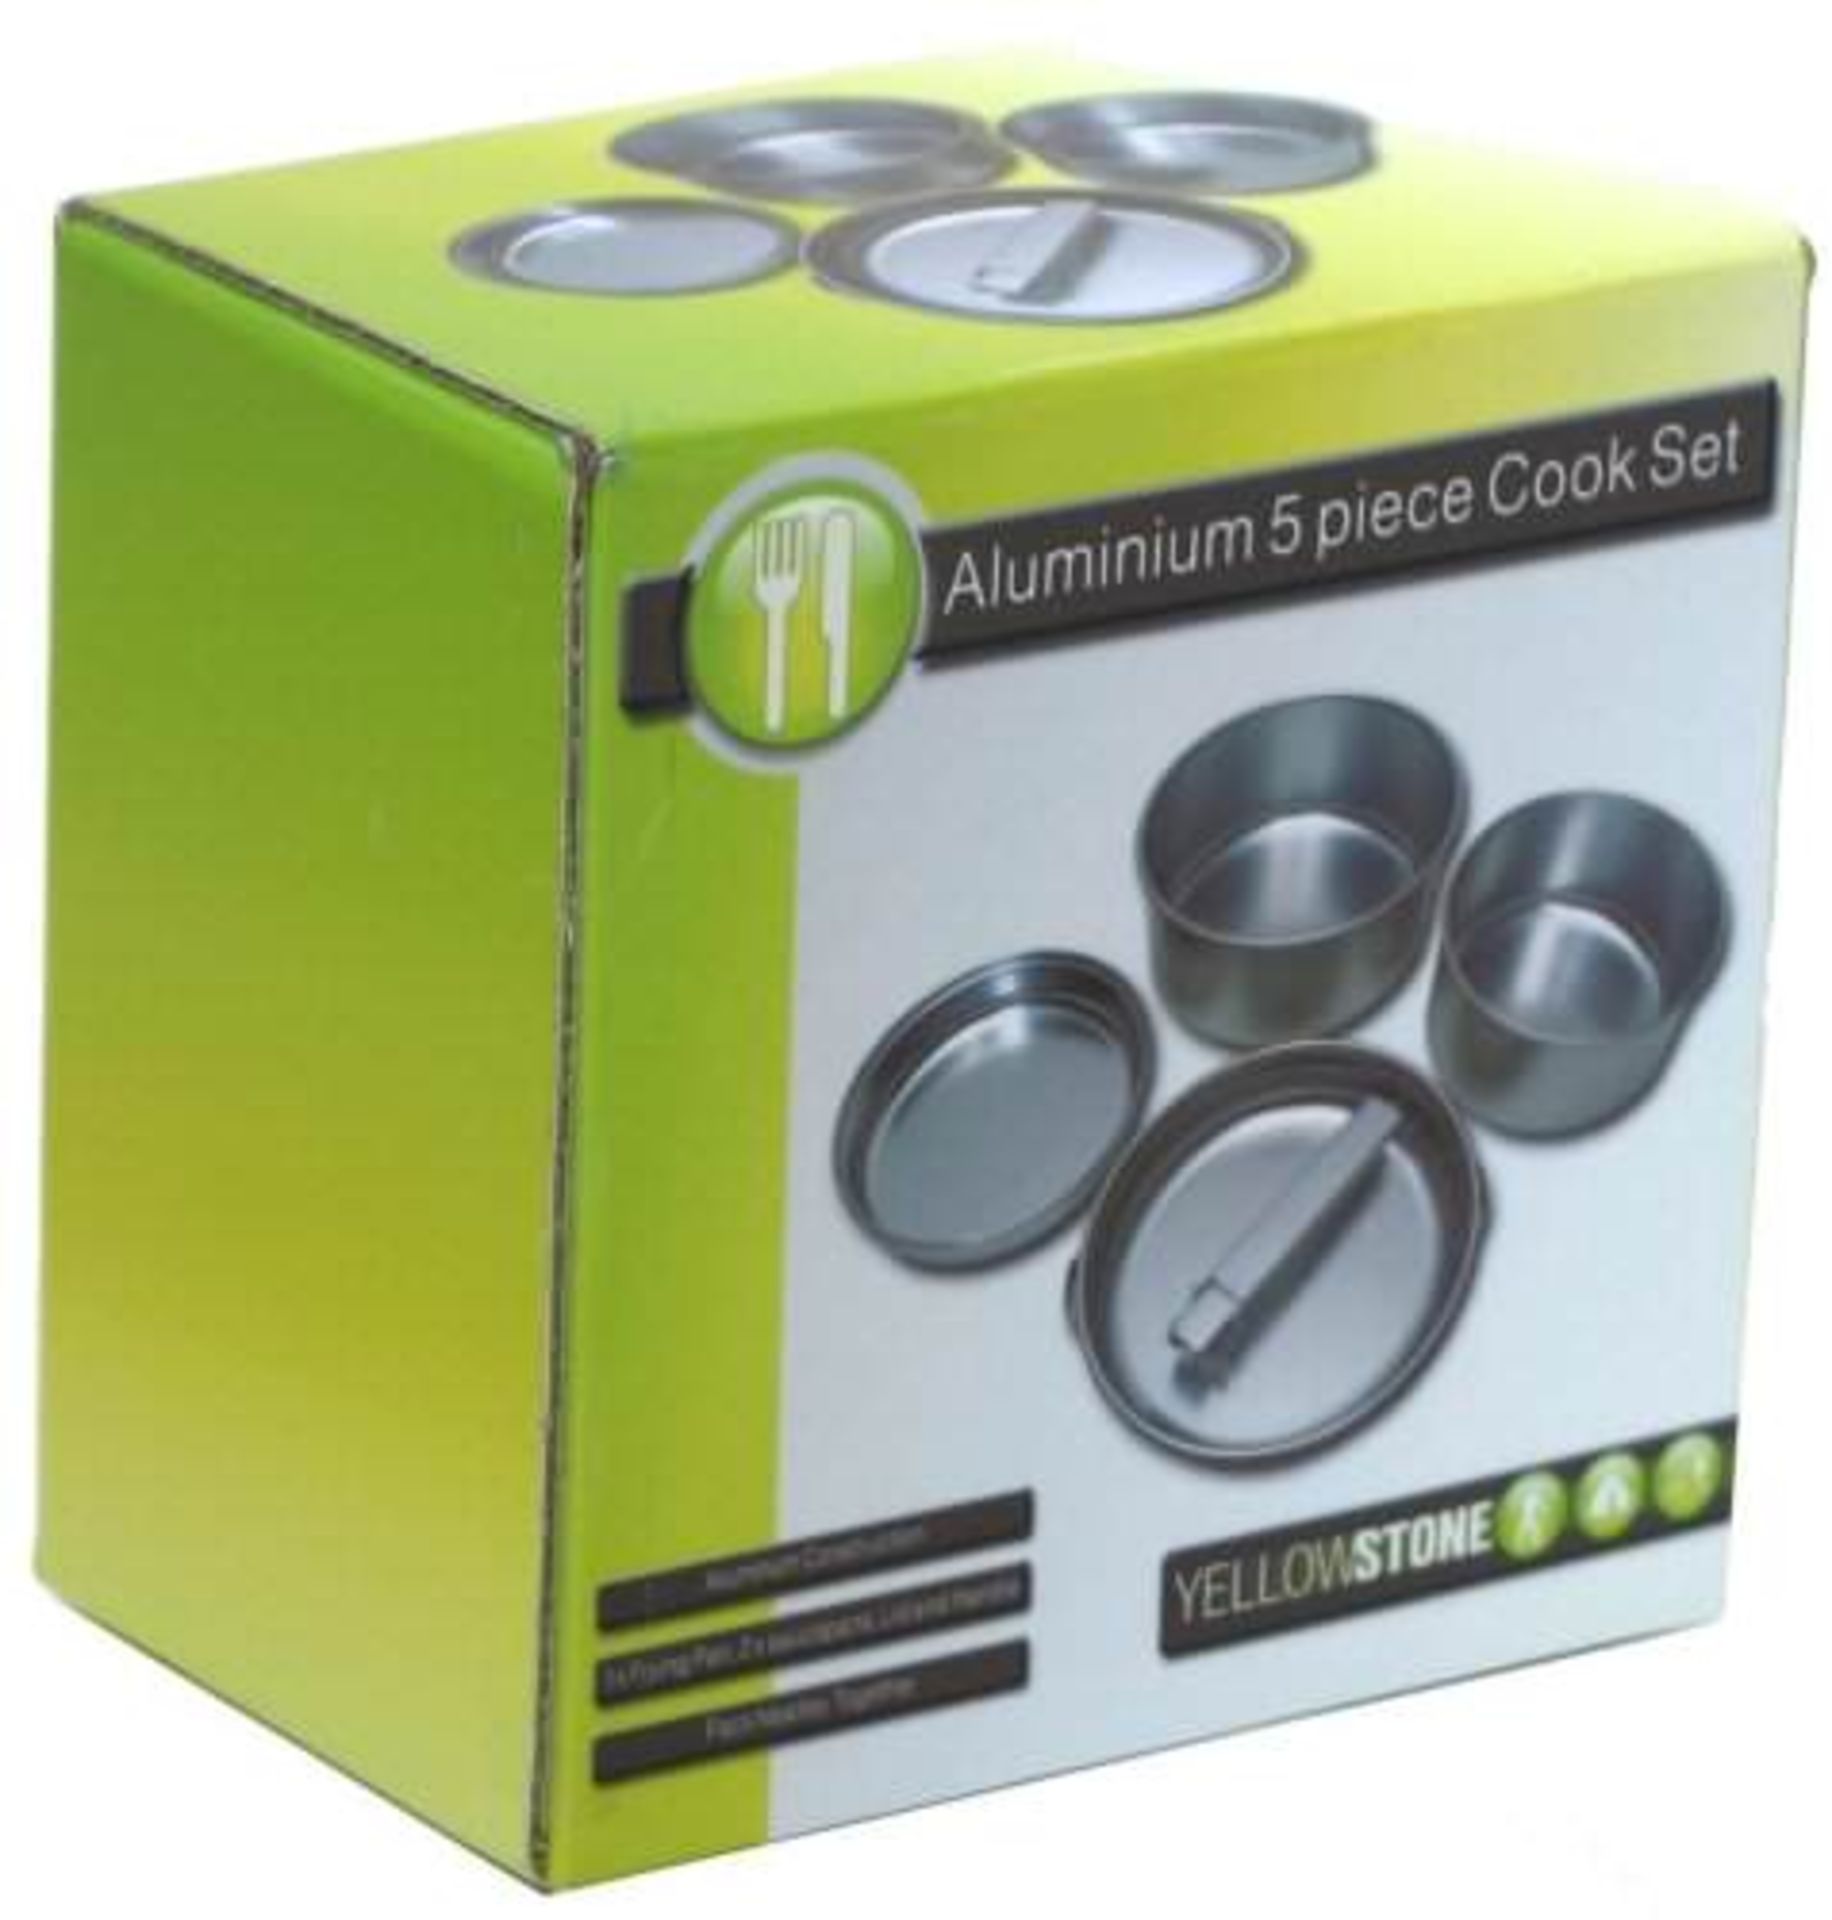 V Brand New 5Pce Aluminium Cook Set Inc 2 Saucepans 1 Frying Pan Etc X 2 YOUR BID PRICE TO BE - Image 2 of 2